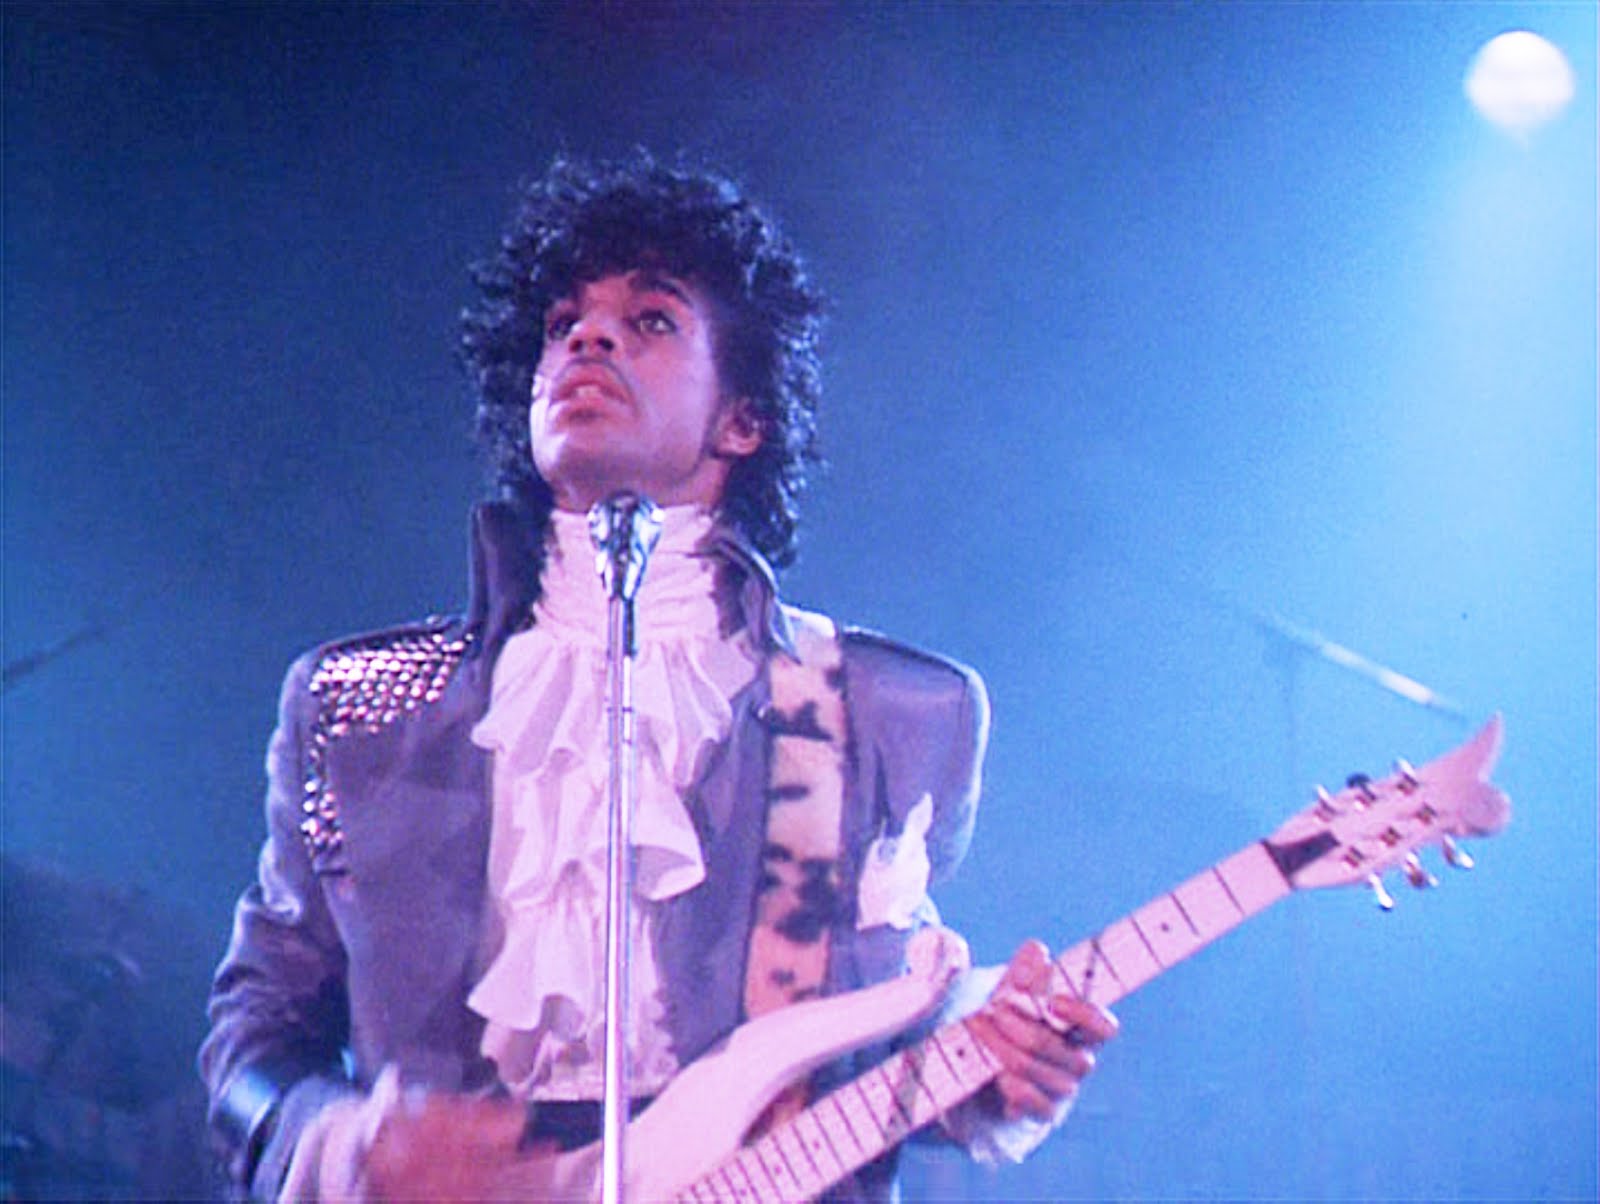 http://b-sides.tv/wp-content/uploads/2014/04/Prince-purple-Rain.jpg